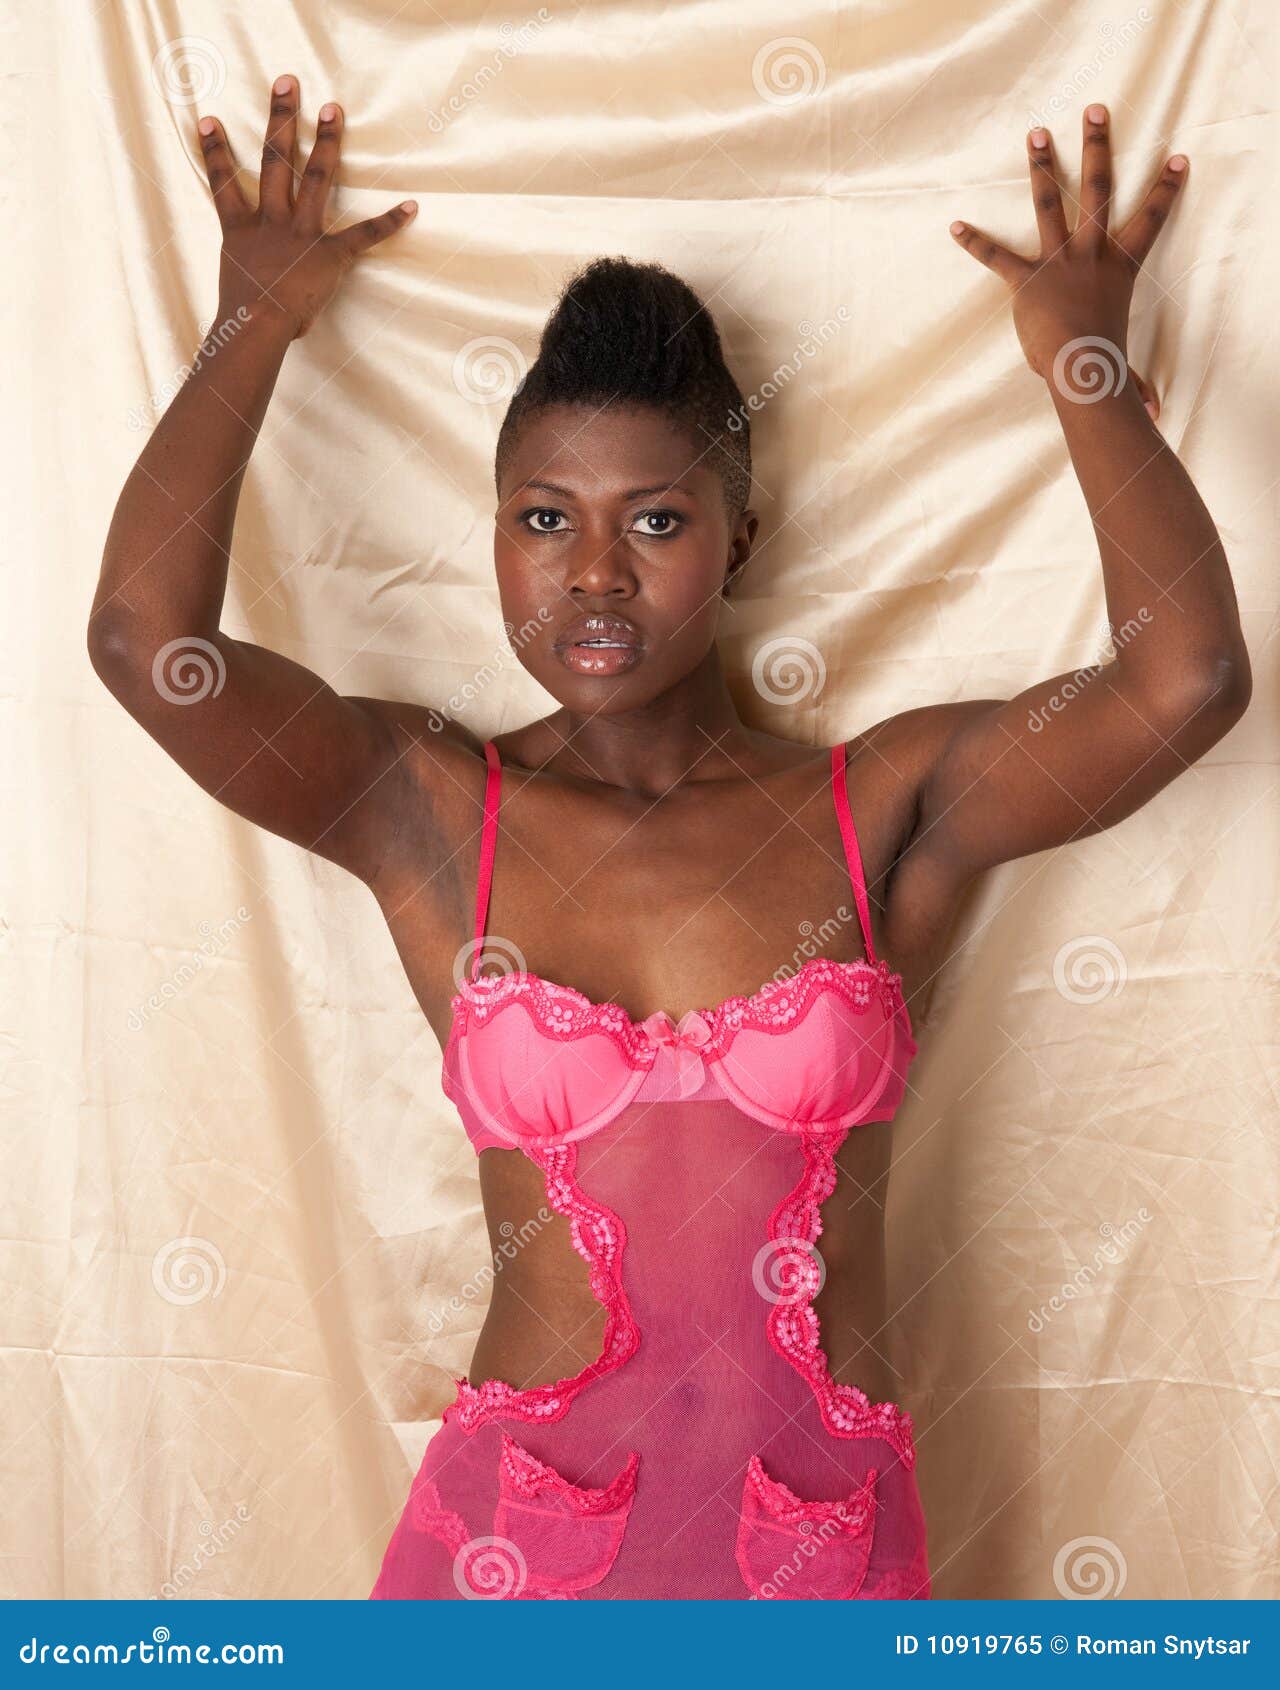 benji dixon add photo black girls in lingerie